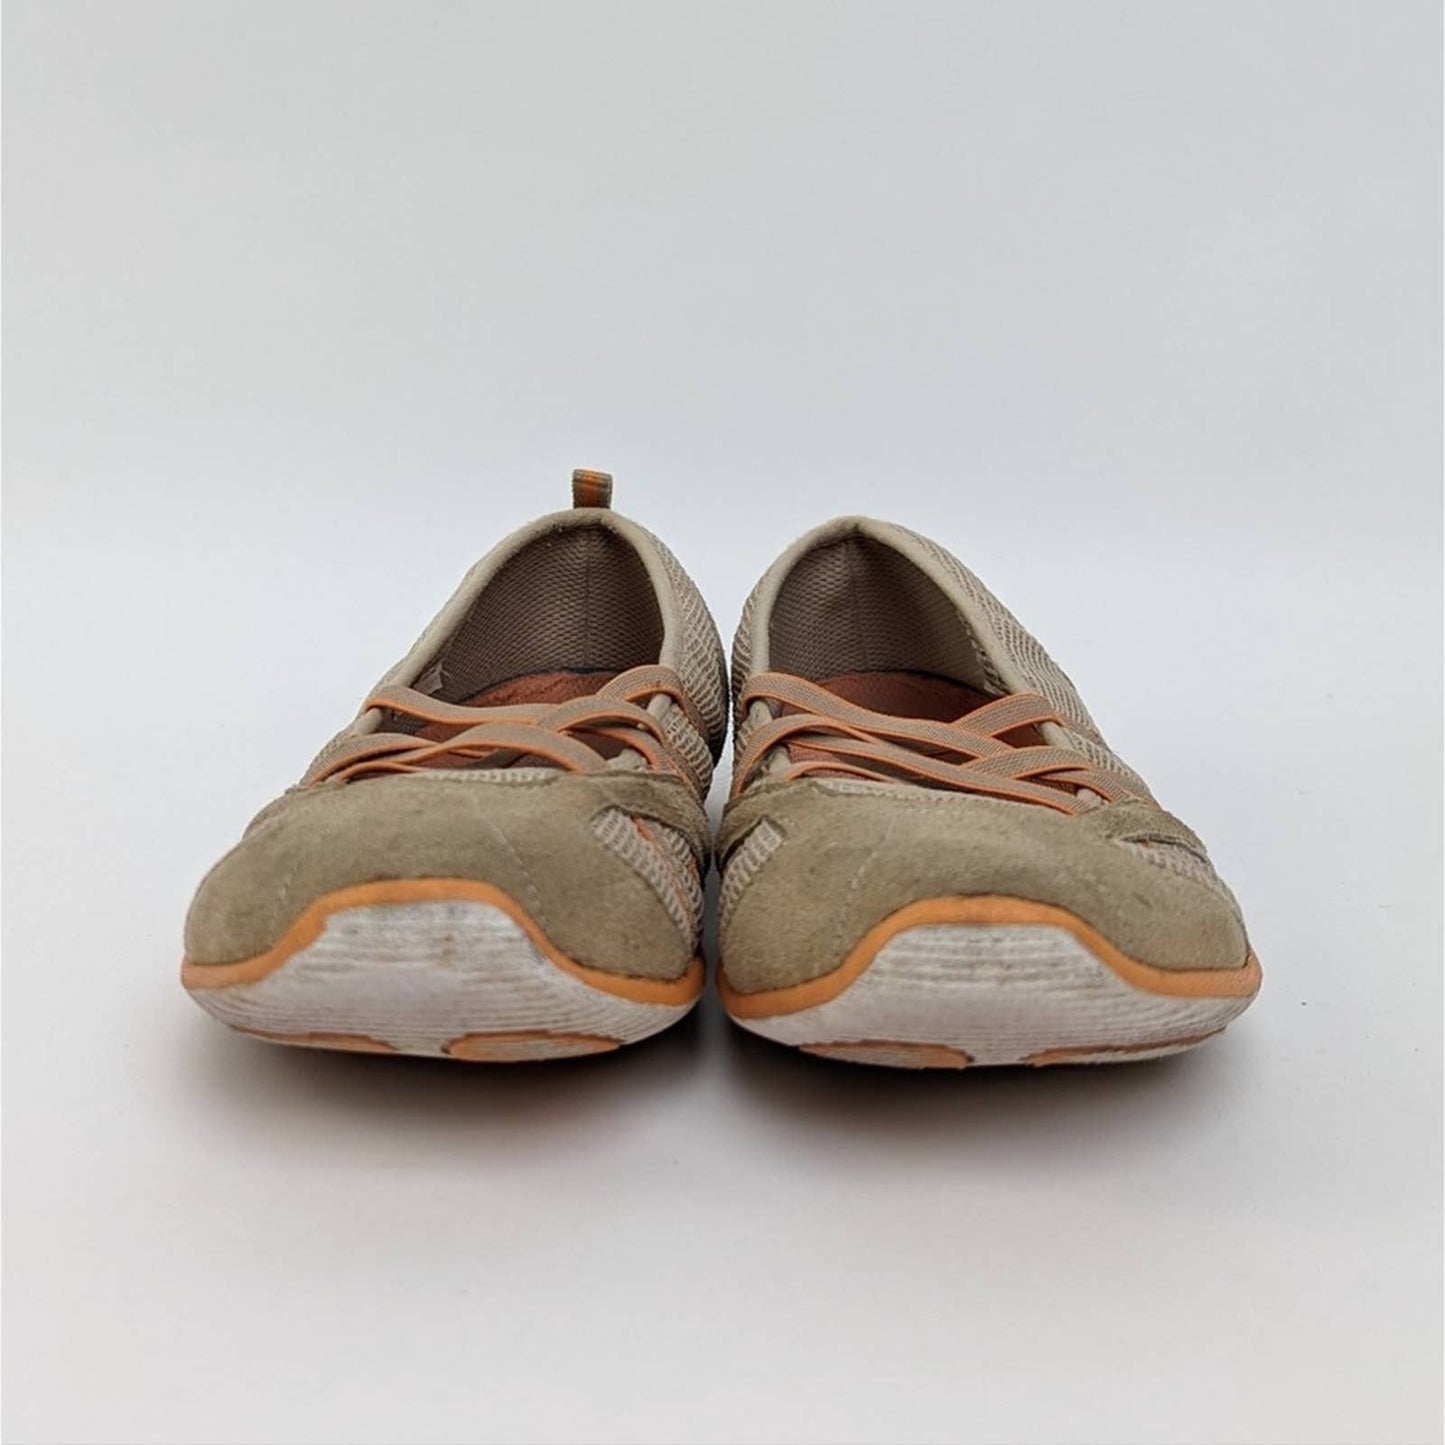 Dr. Scholls Elsie Tan-Orange Slip On Walking Shoes - 9